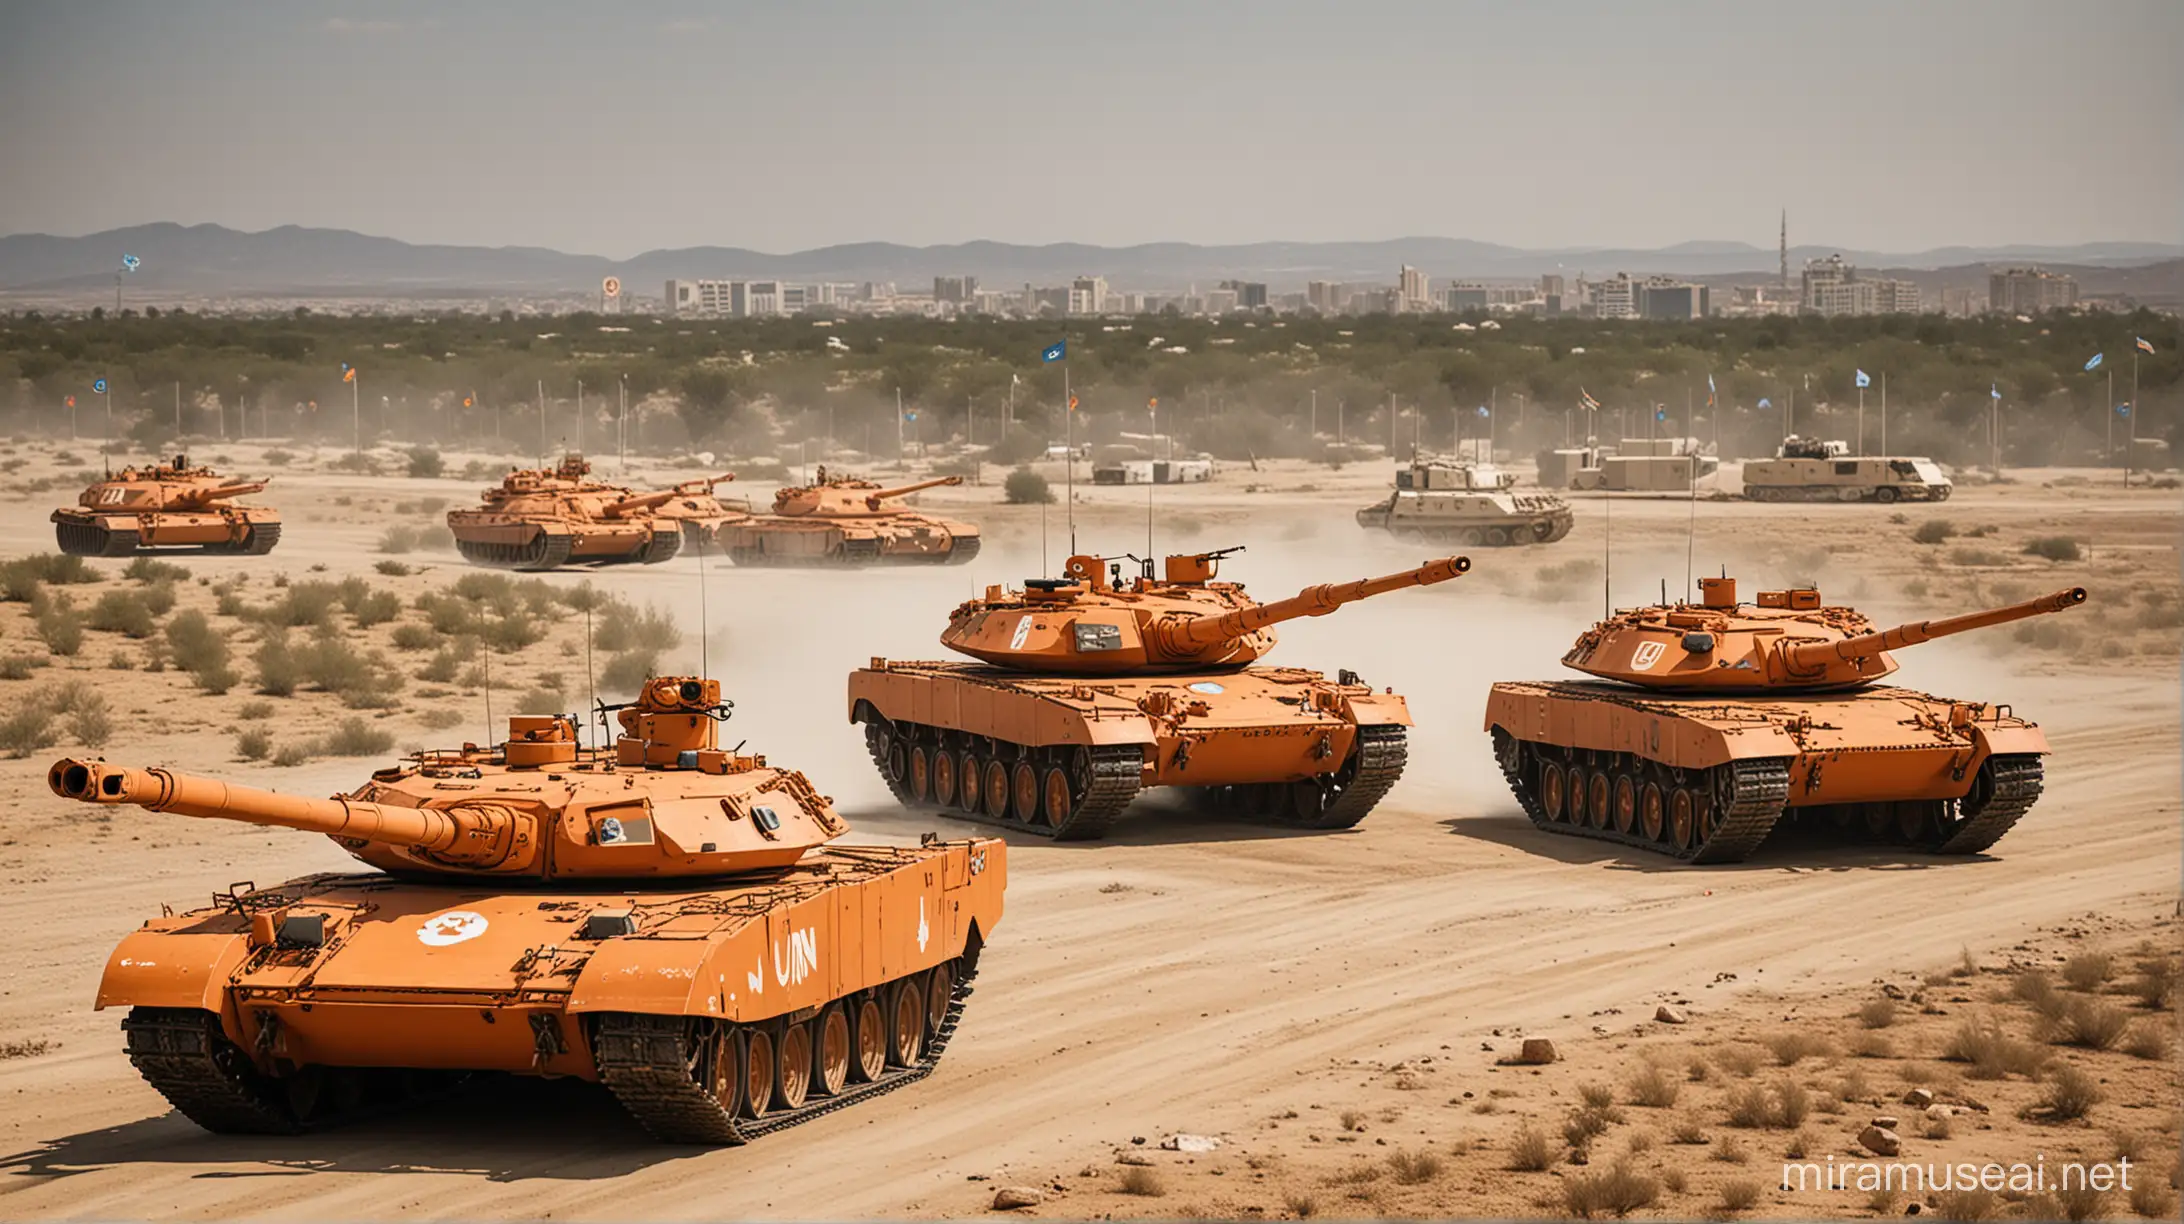 UN Orange Military Tanks Peacekeeping Operation